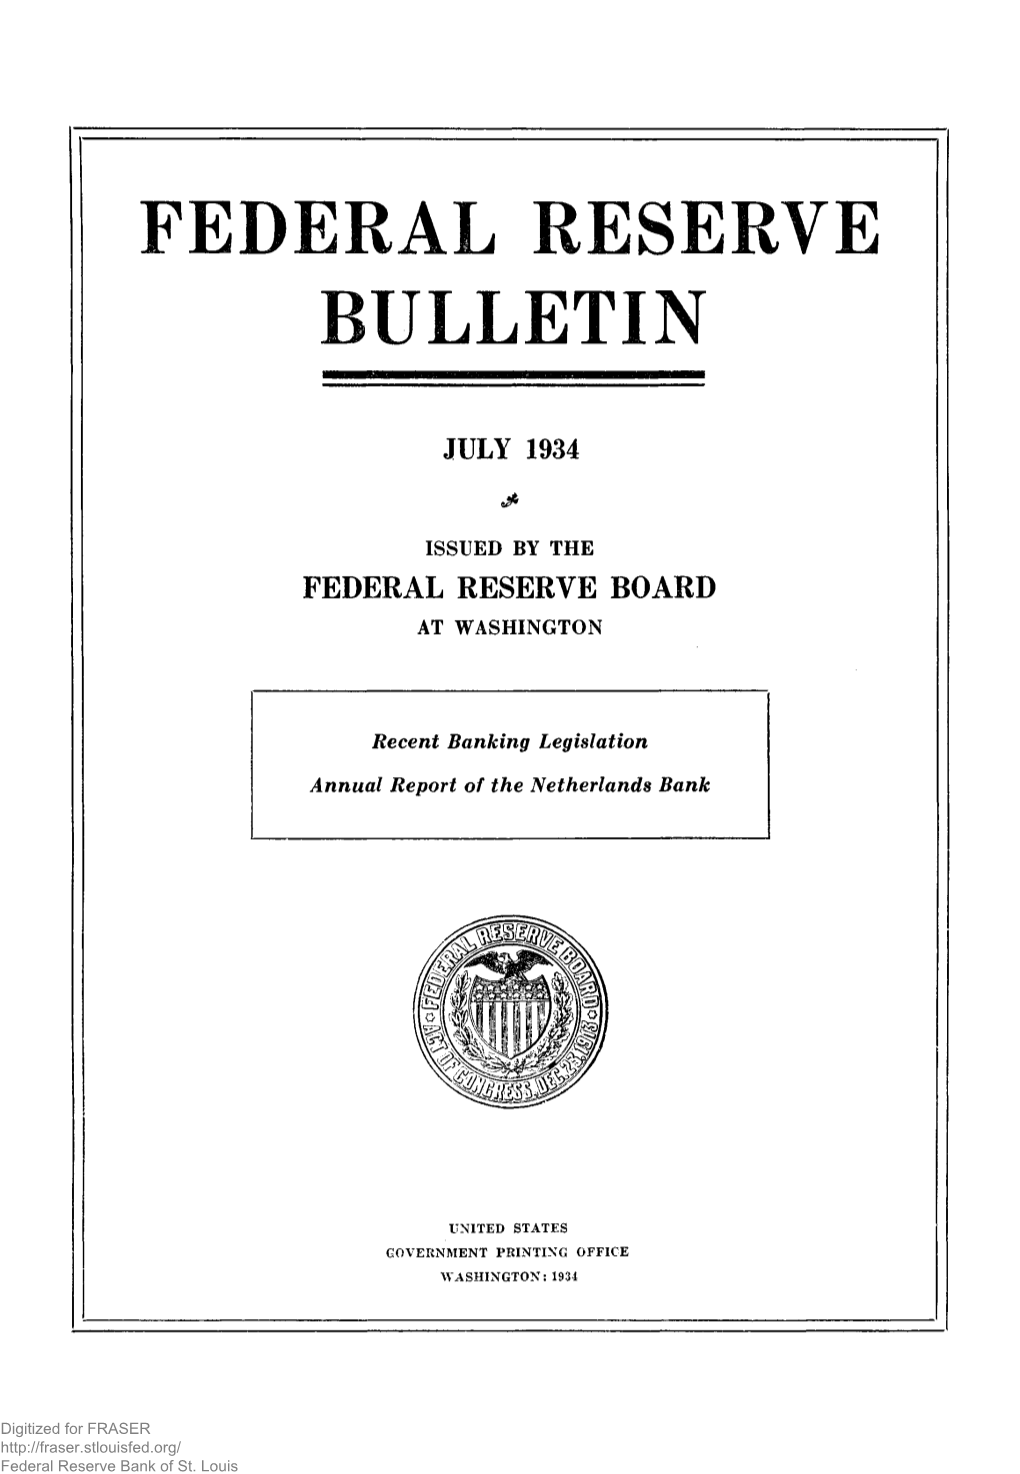 Federal Reserve Bulletin July 1934